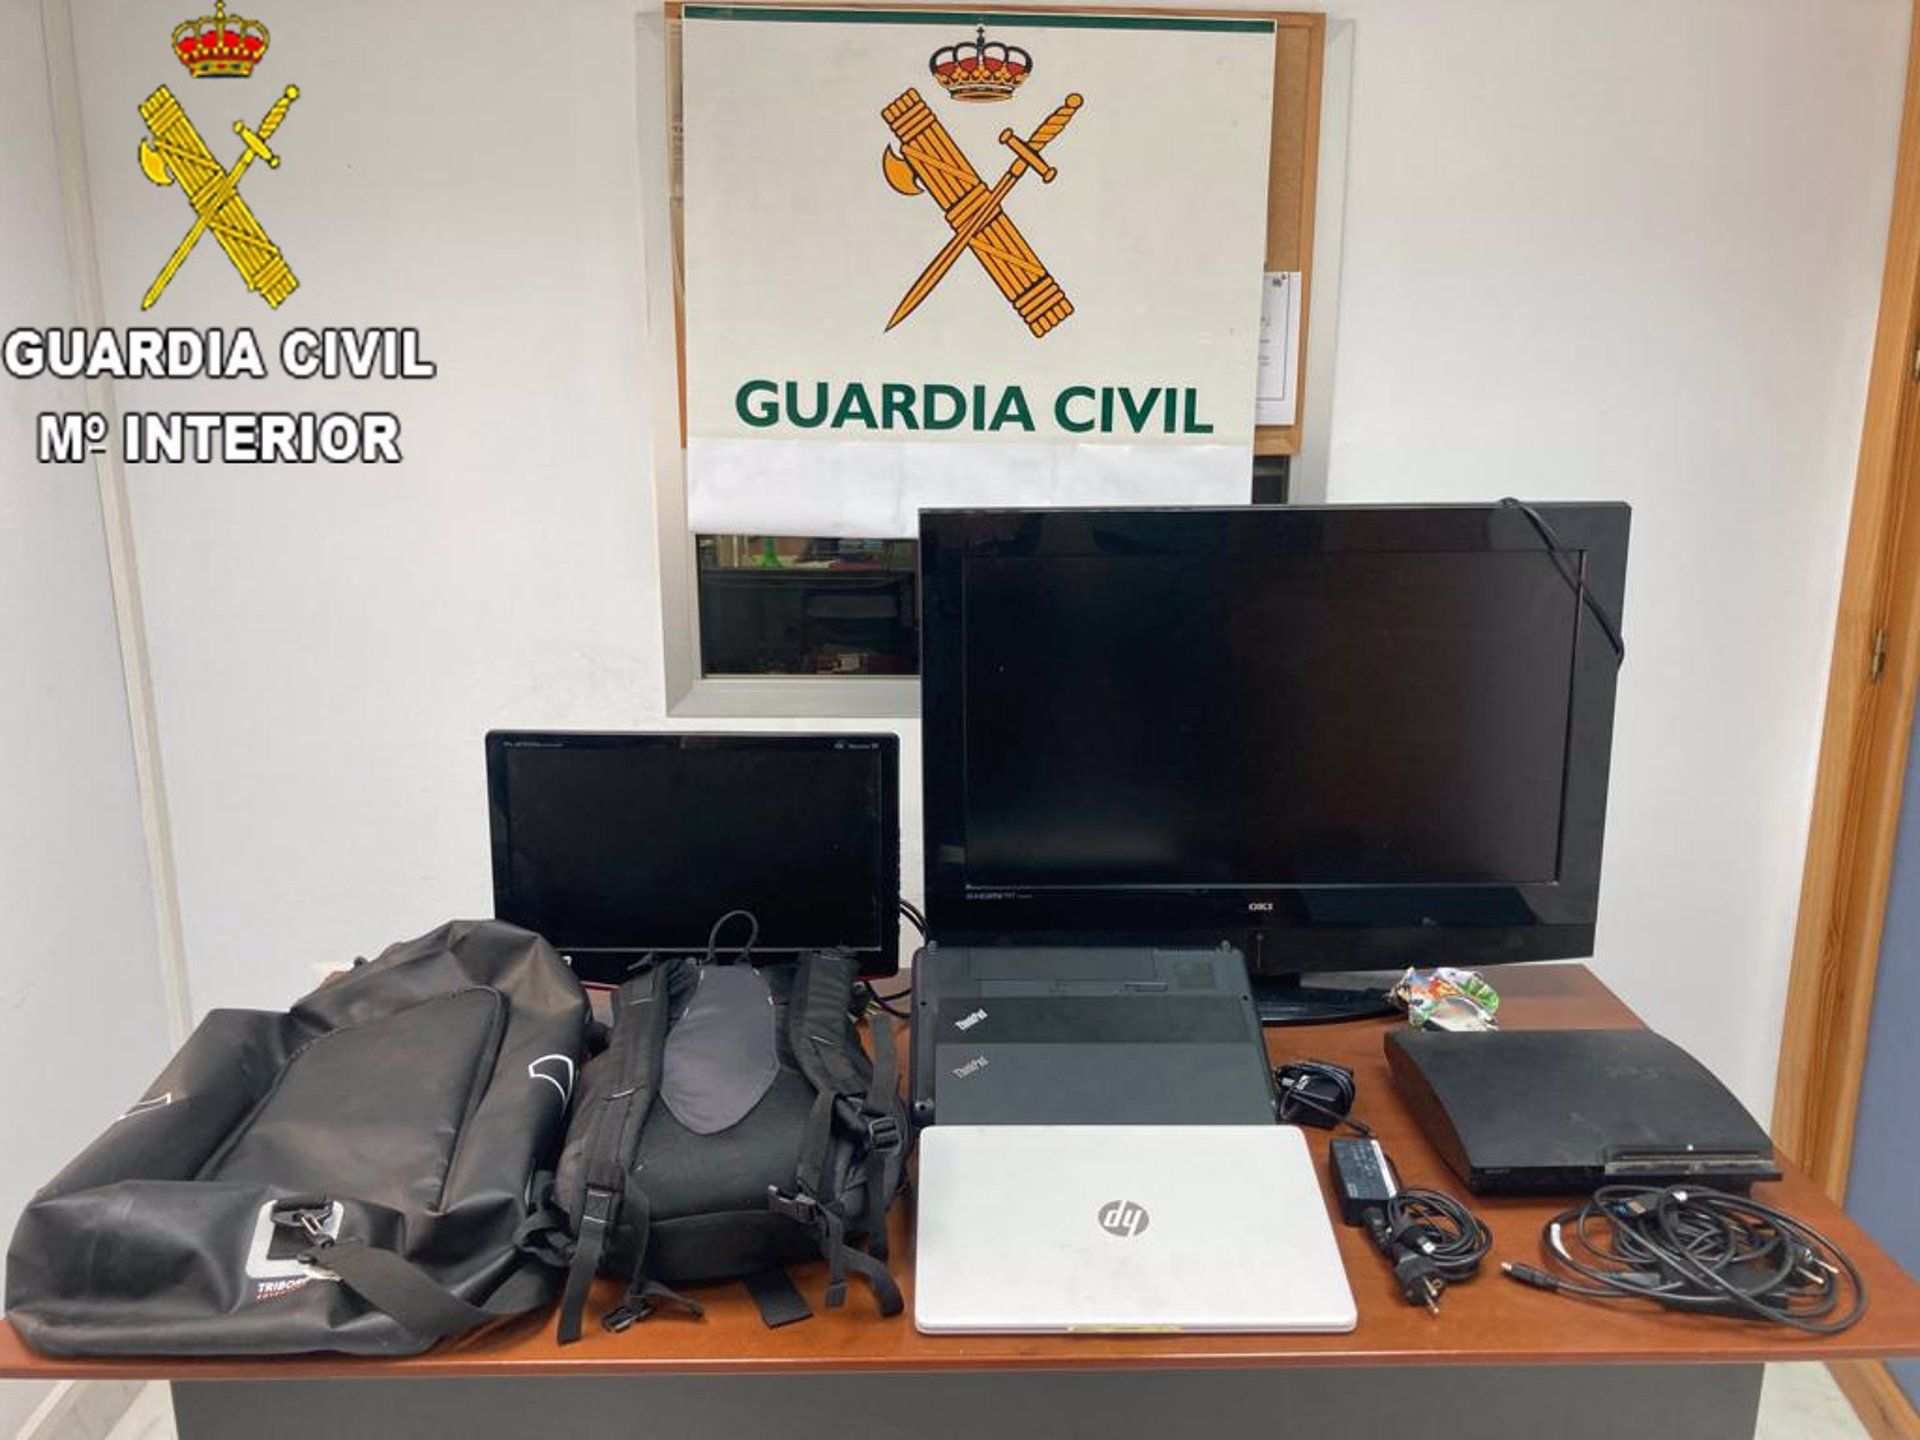 Ola de robos en viviendas de Conil. Material robado por los detenidos interceptado por la Guardia Civil de Cádiz.